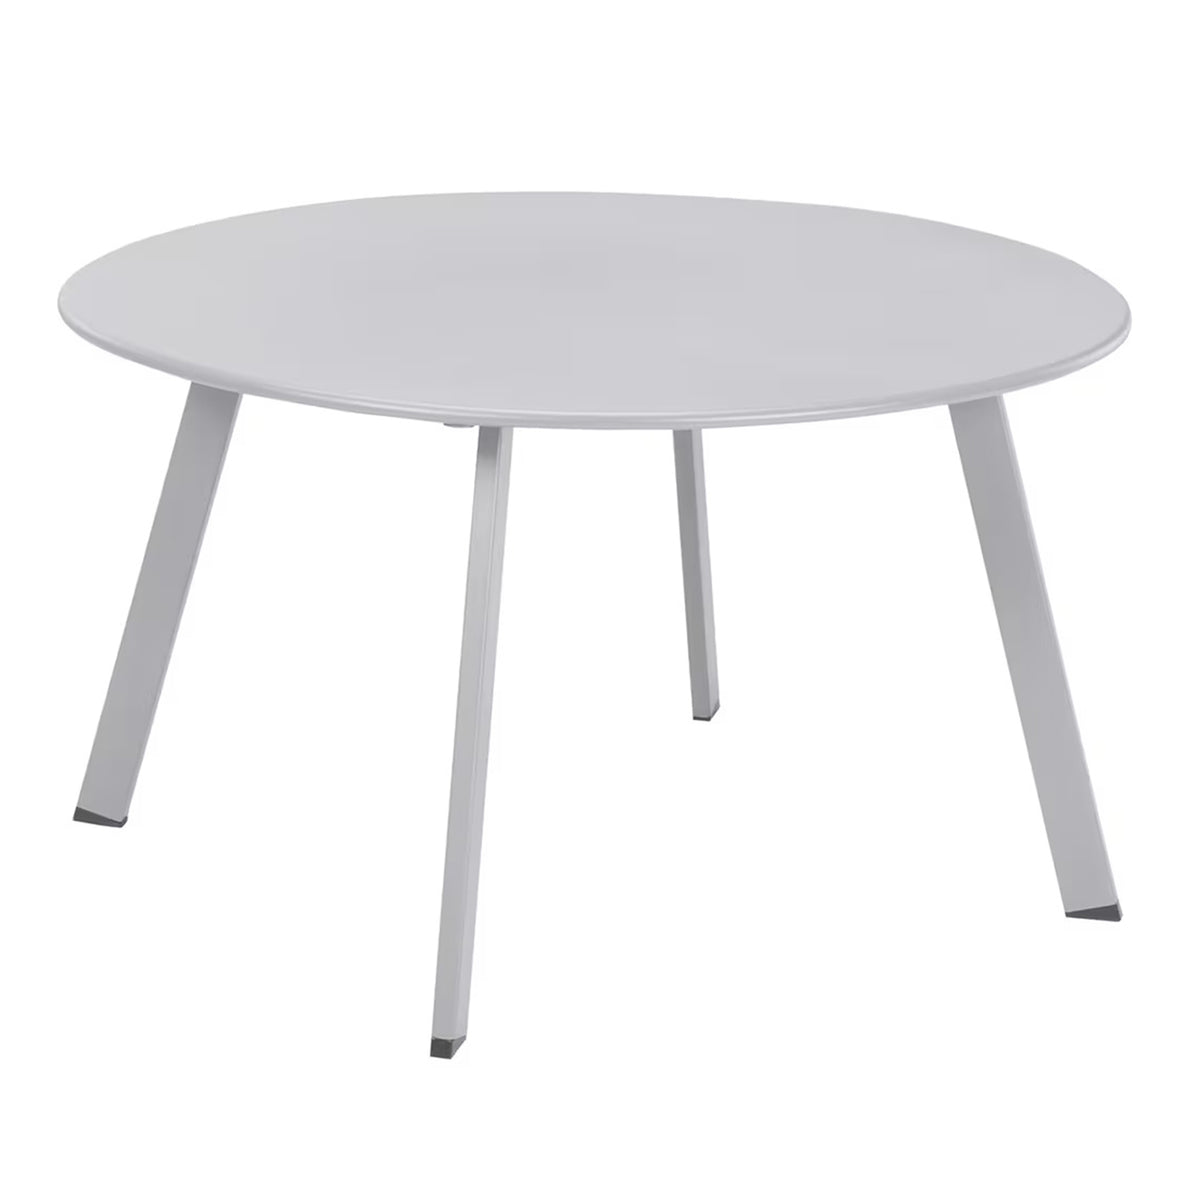 Round table - grey